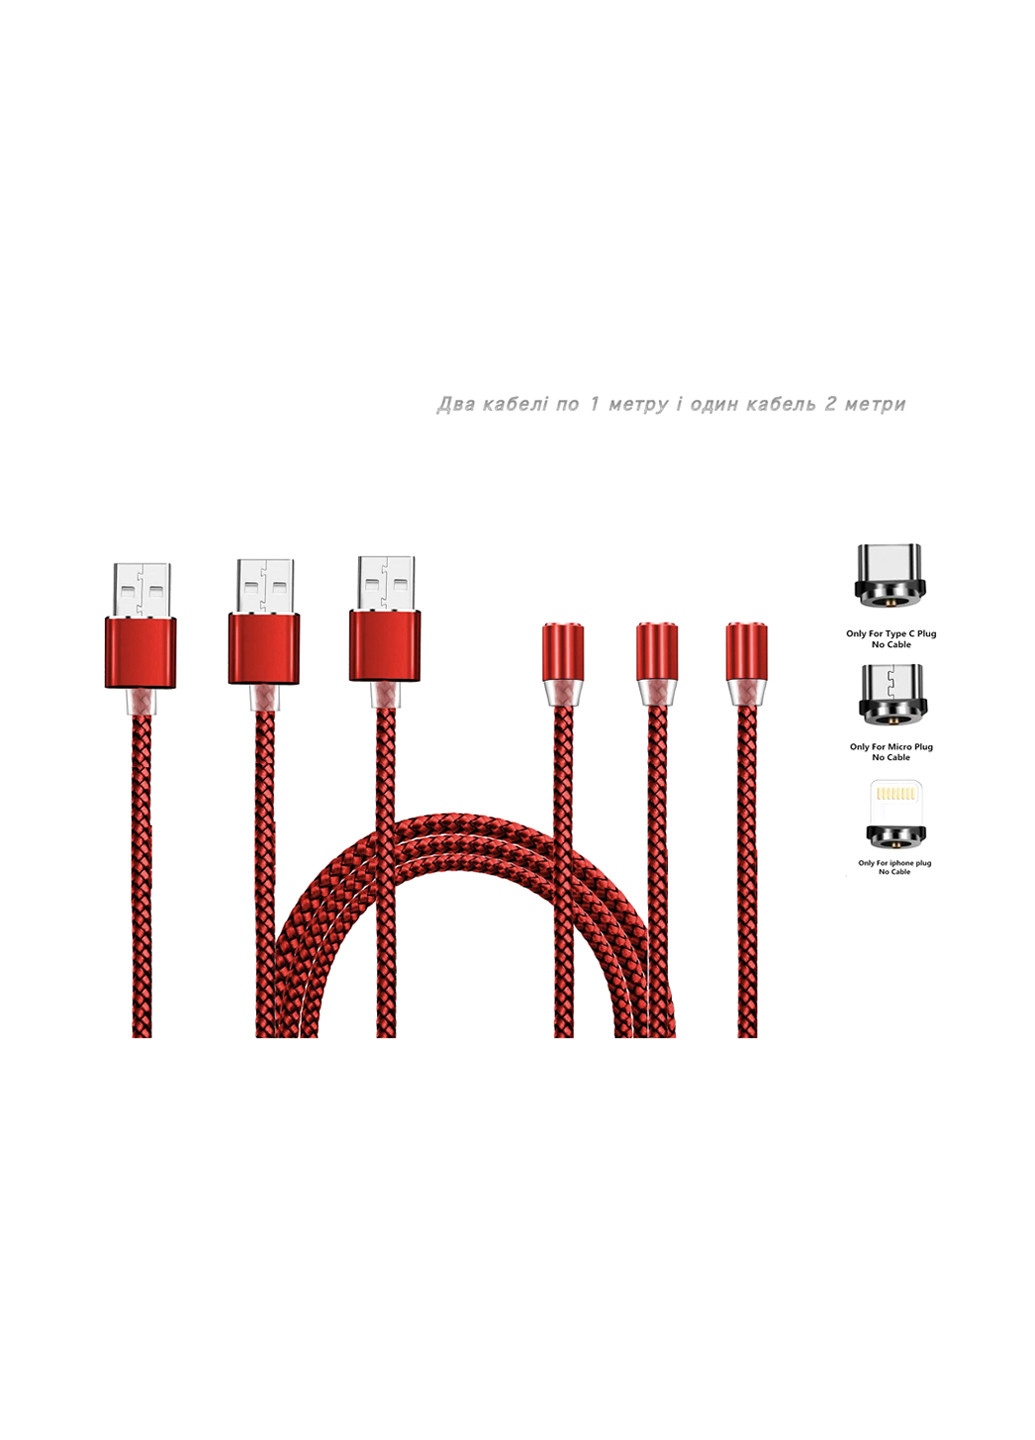 Набор магнитных кабелей USB SC-300 Magneto Red - 3 в 1, 2х1 метр и 1х2 метра XoKo sc-300 набор магнитных кабелей usb type-c/lightning/ micro usb (132572861)